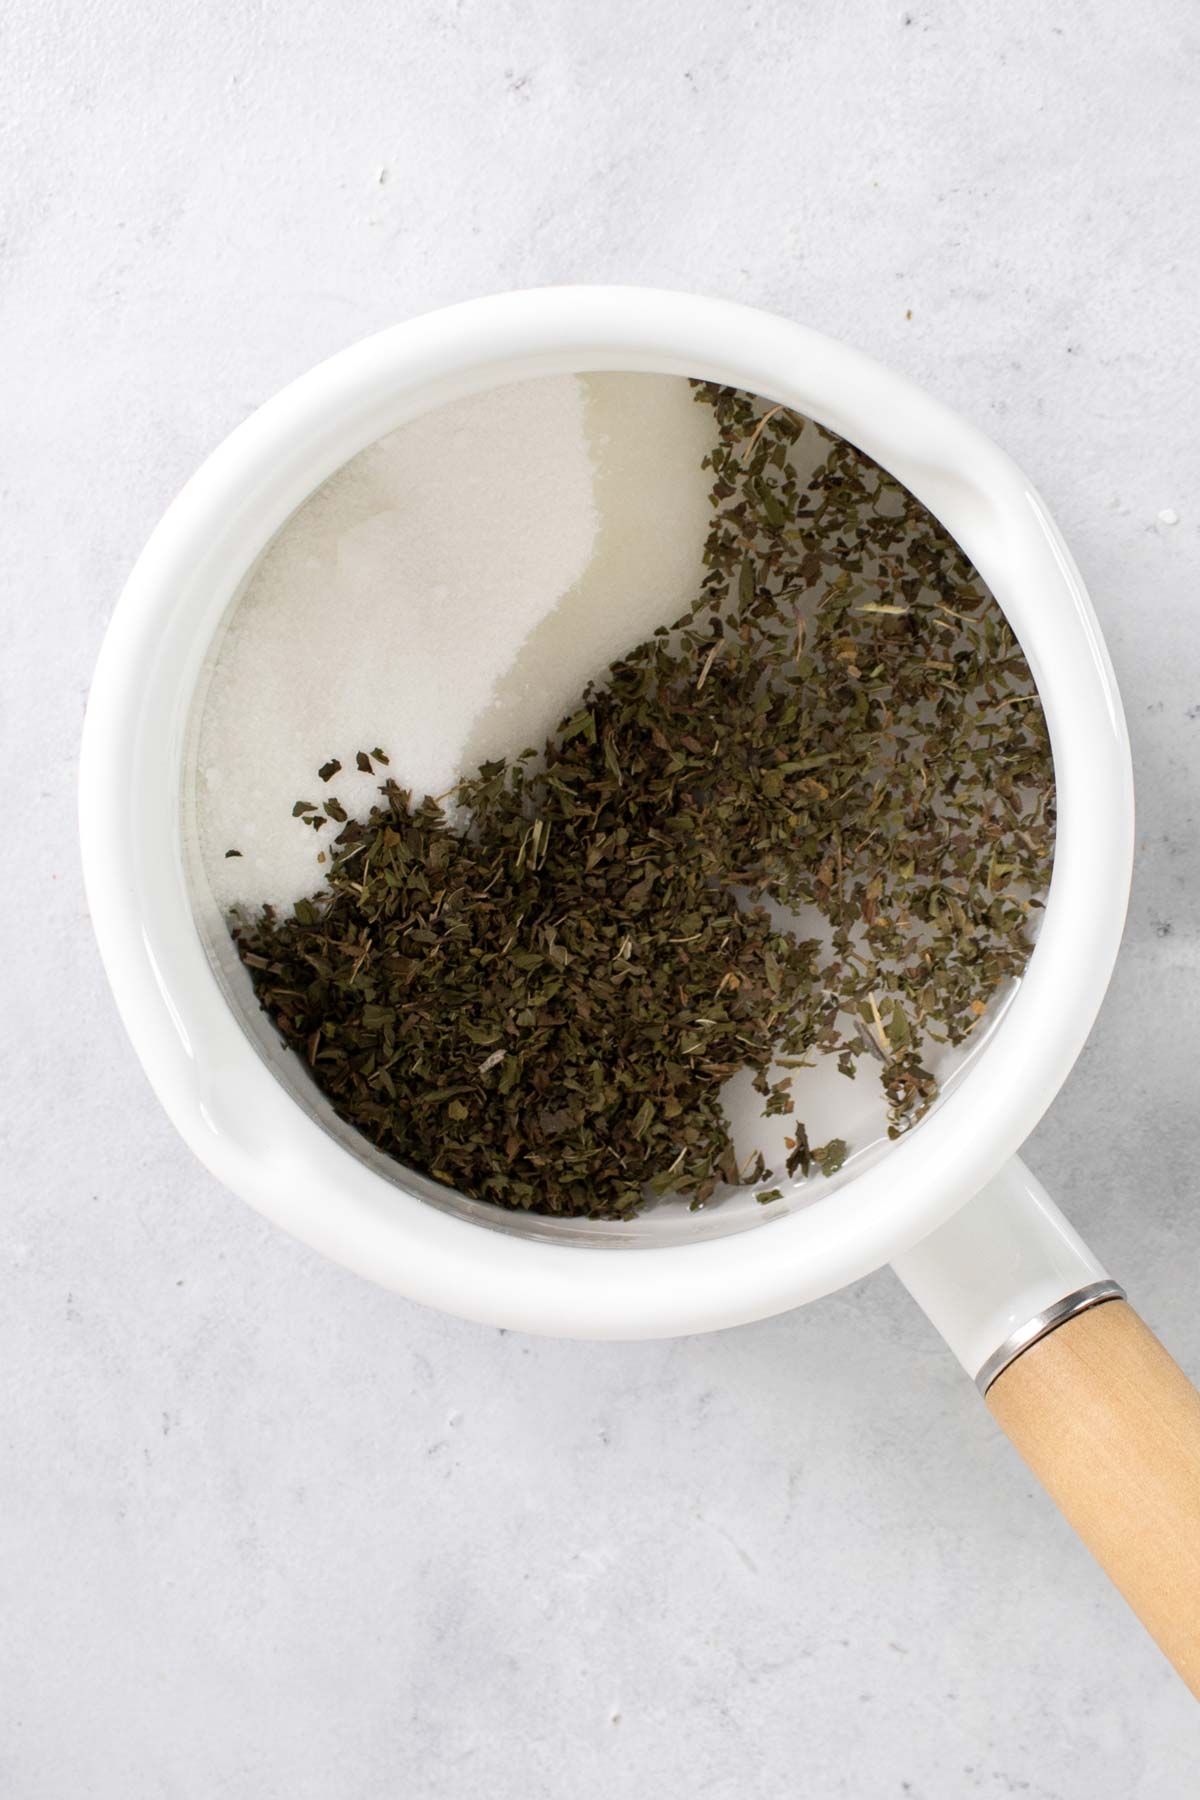 Water, sugar, and peppermint tea in a saucepan.